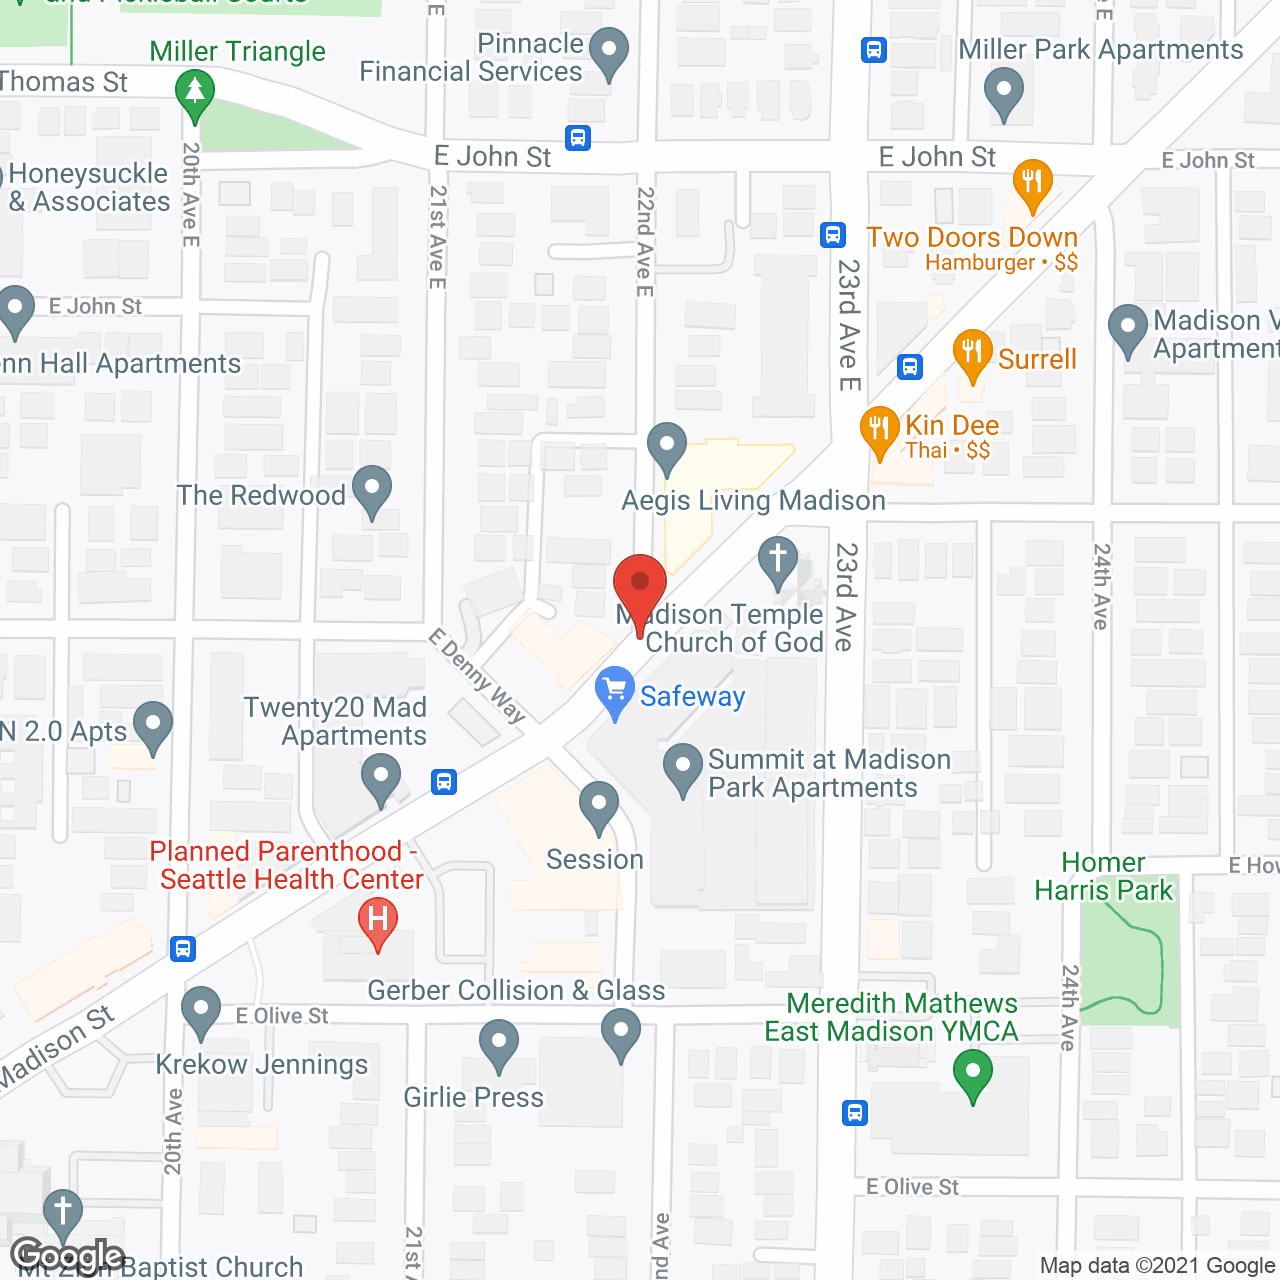 Aegis on Madison in google map